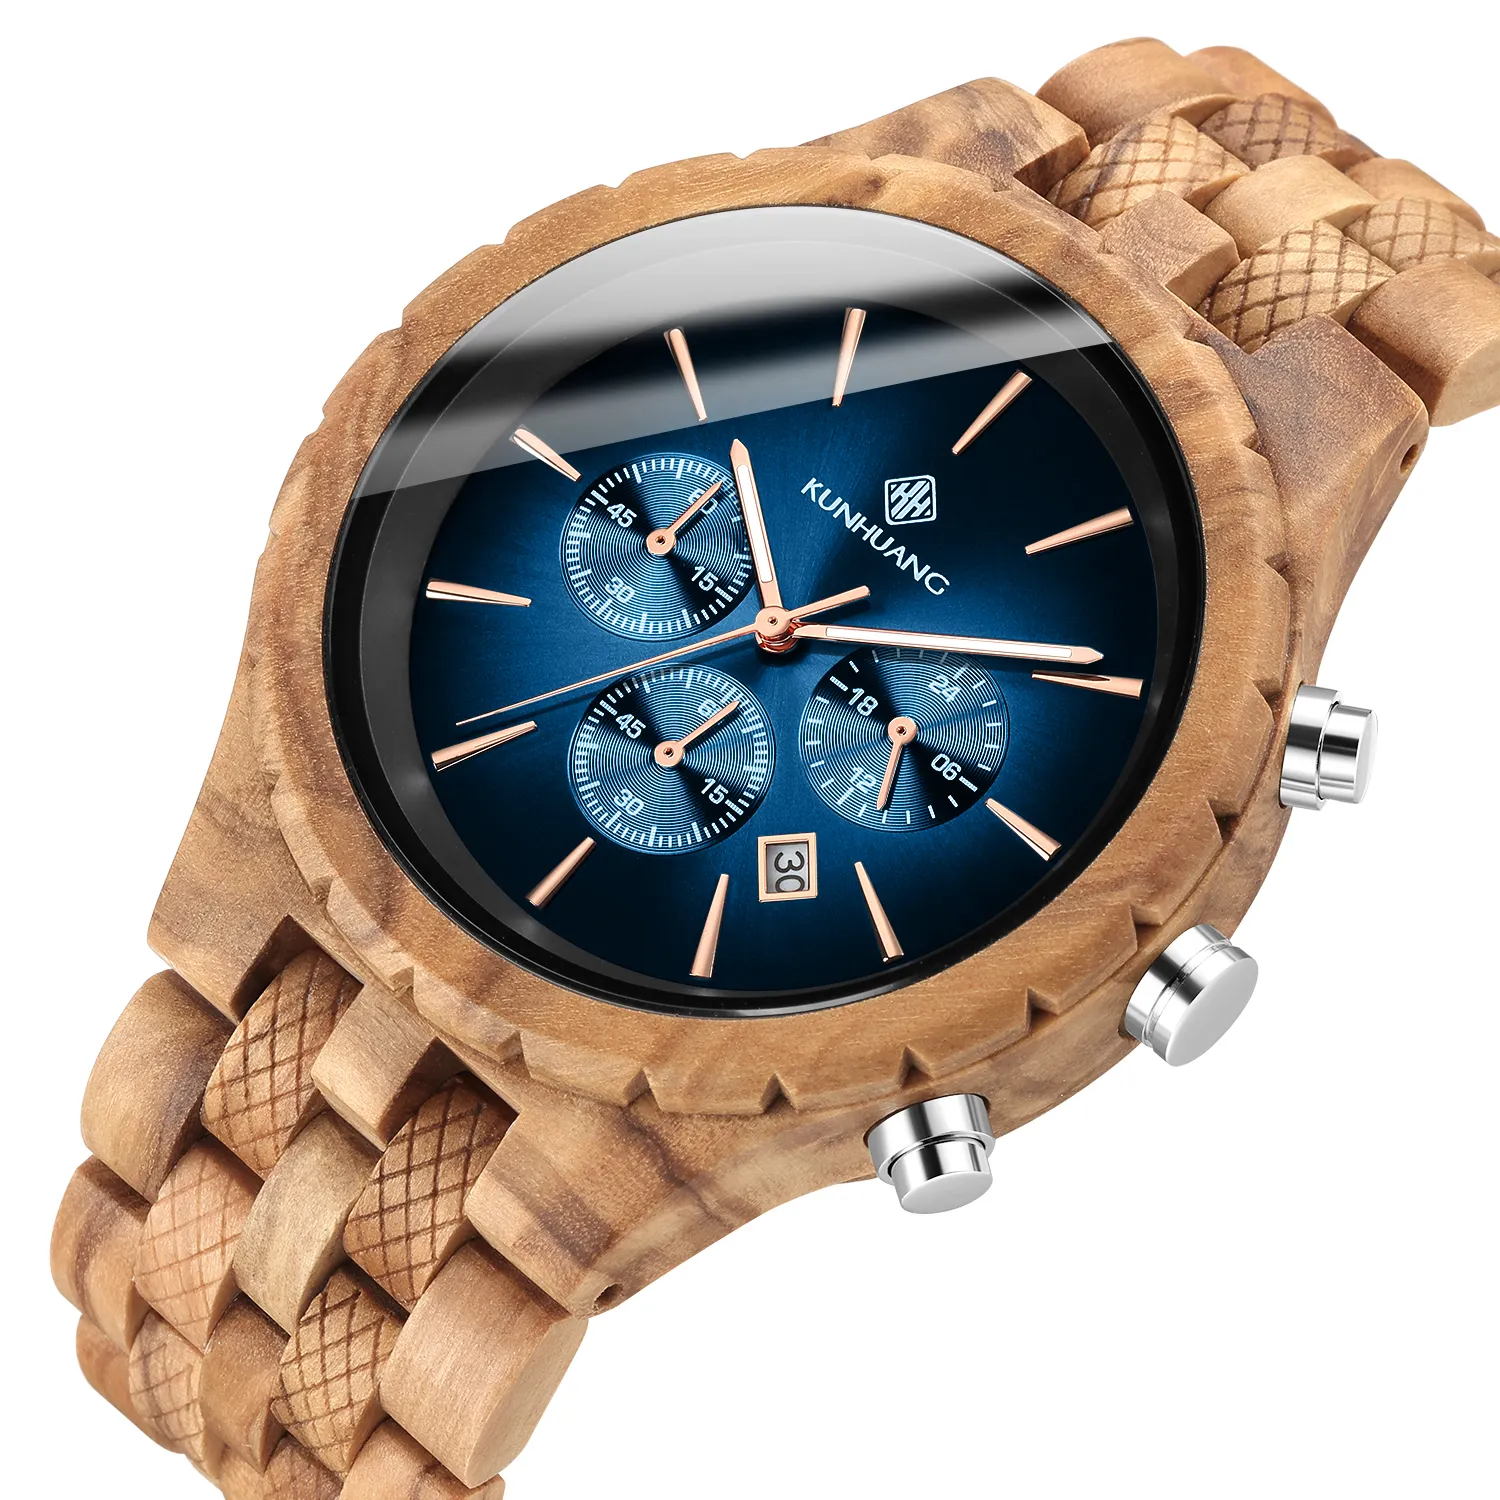 Kunhuangウッドウォッチマン多機能ファッション時計クロノグラフシンプルピュアウッドウォッチスポーツクォーツ腕時計